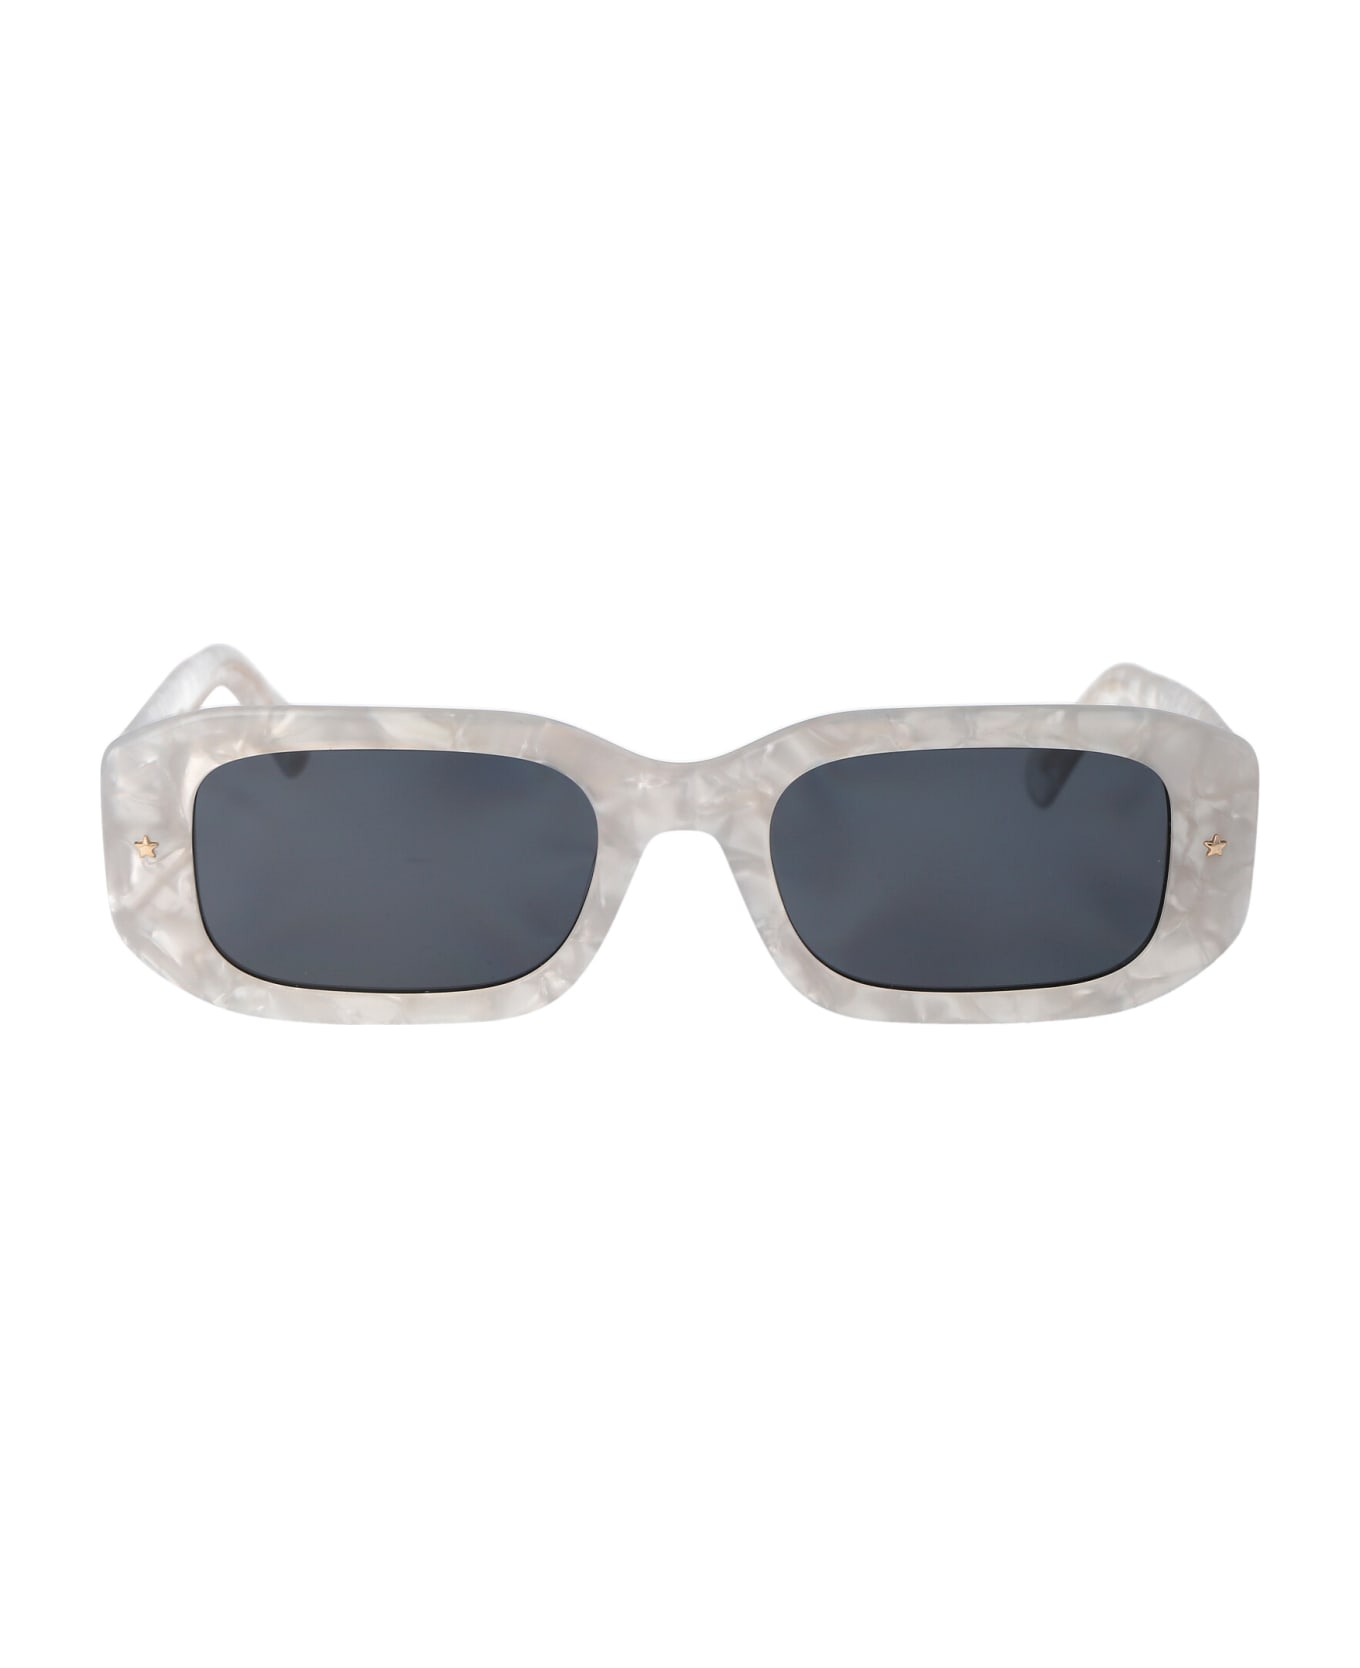 Chiara Ferragni Cf 7031/s Sunglasses - 7APIR PEARLED WHITE サングラス